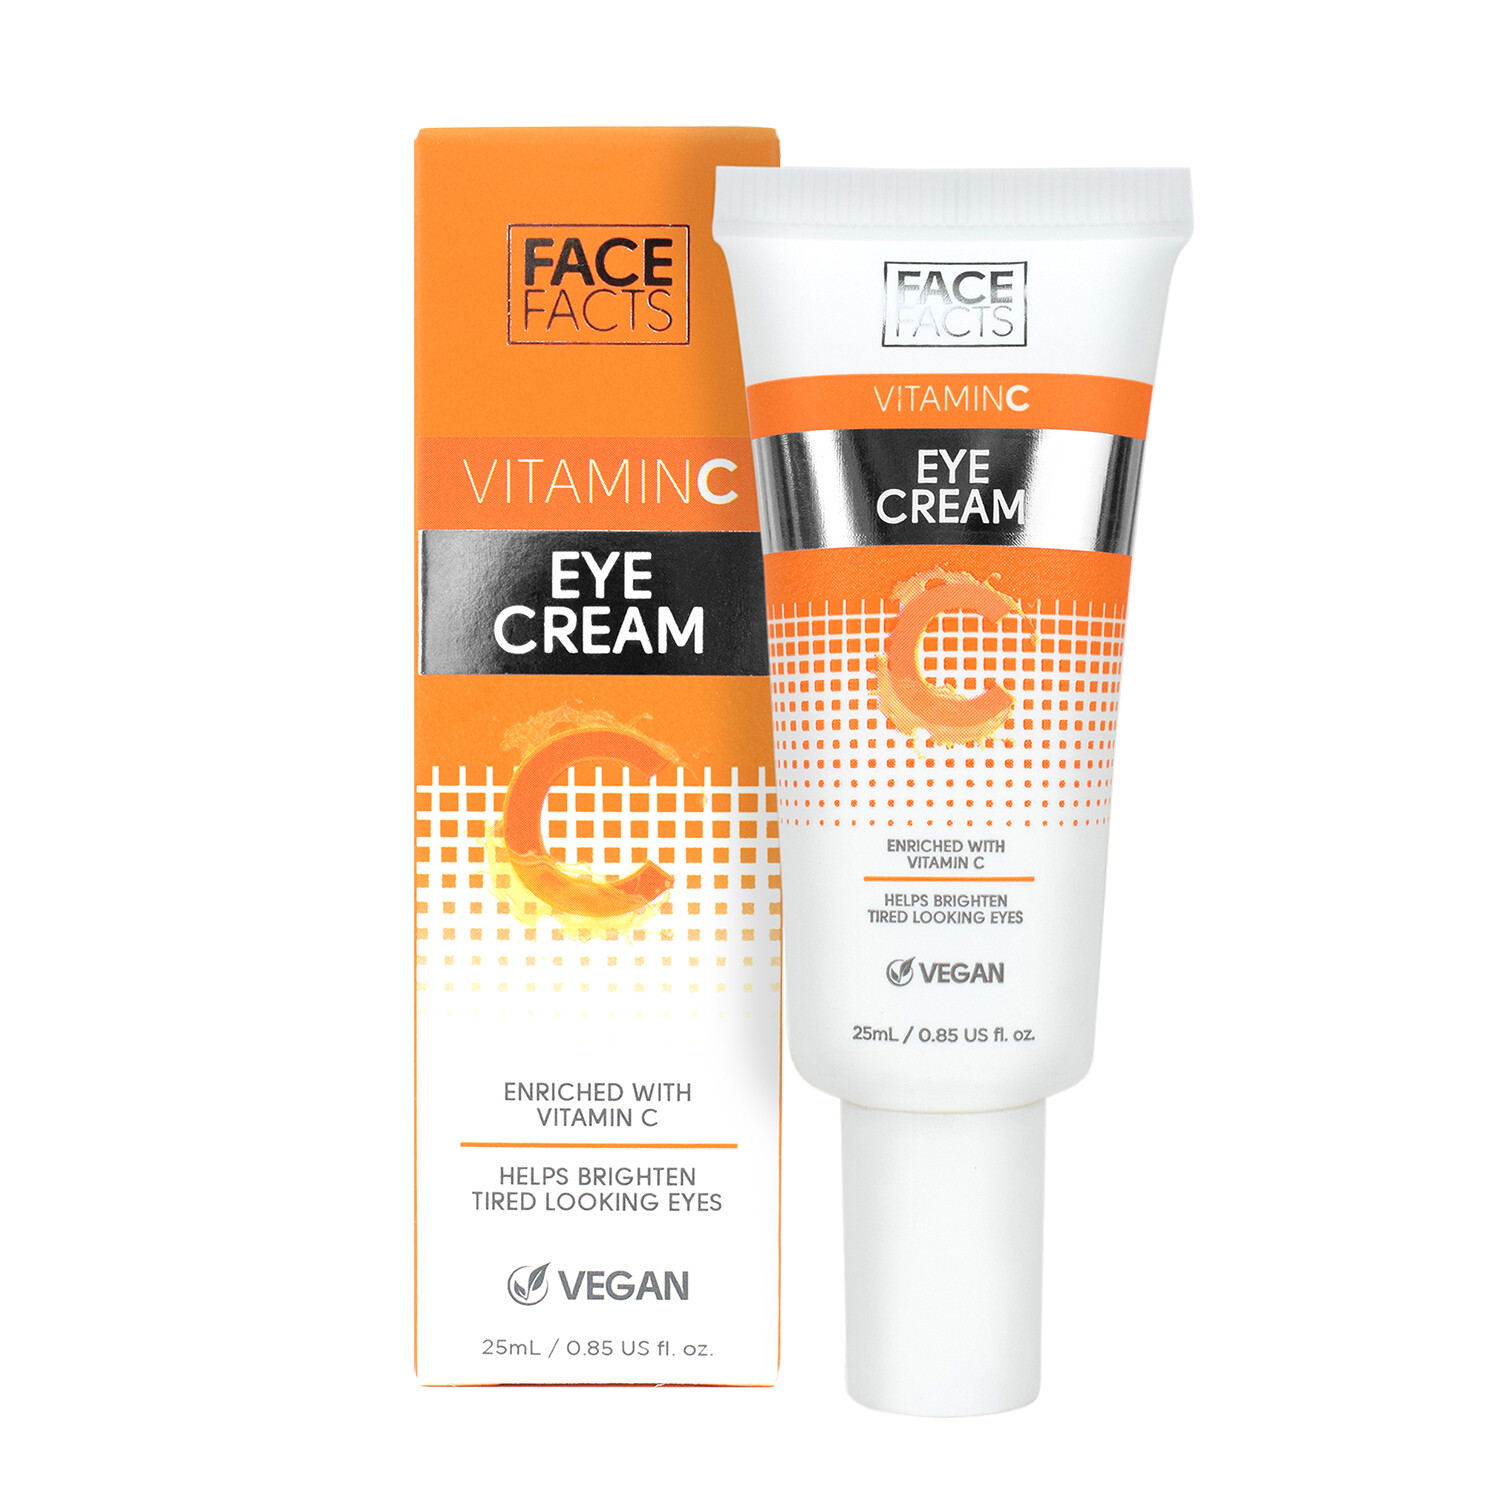 Face Facts Vitamin C Eye Cream Image